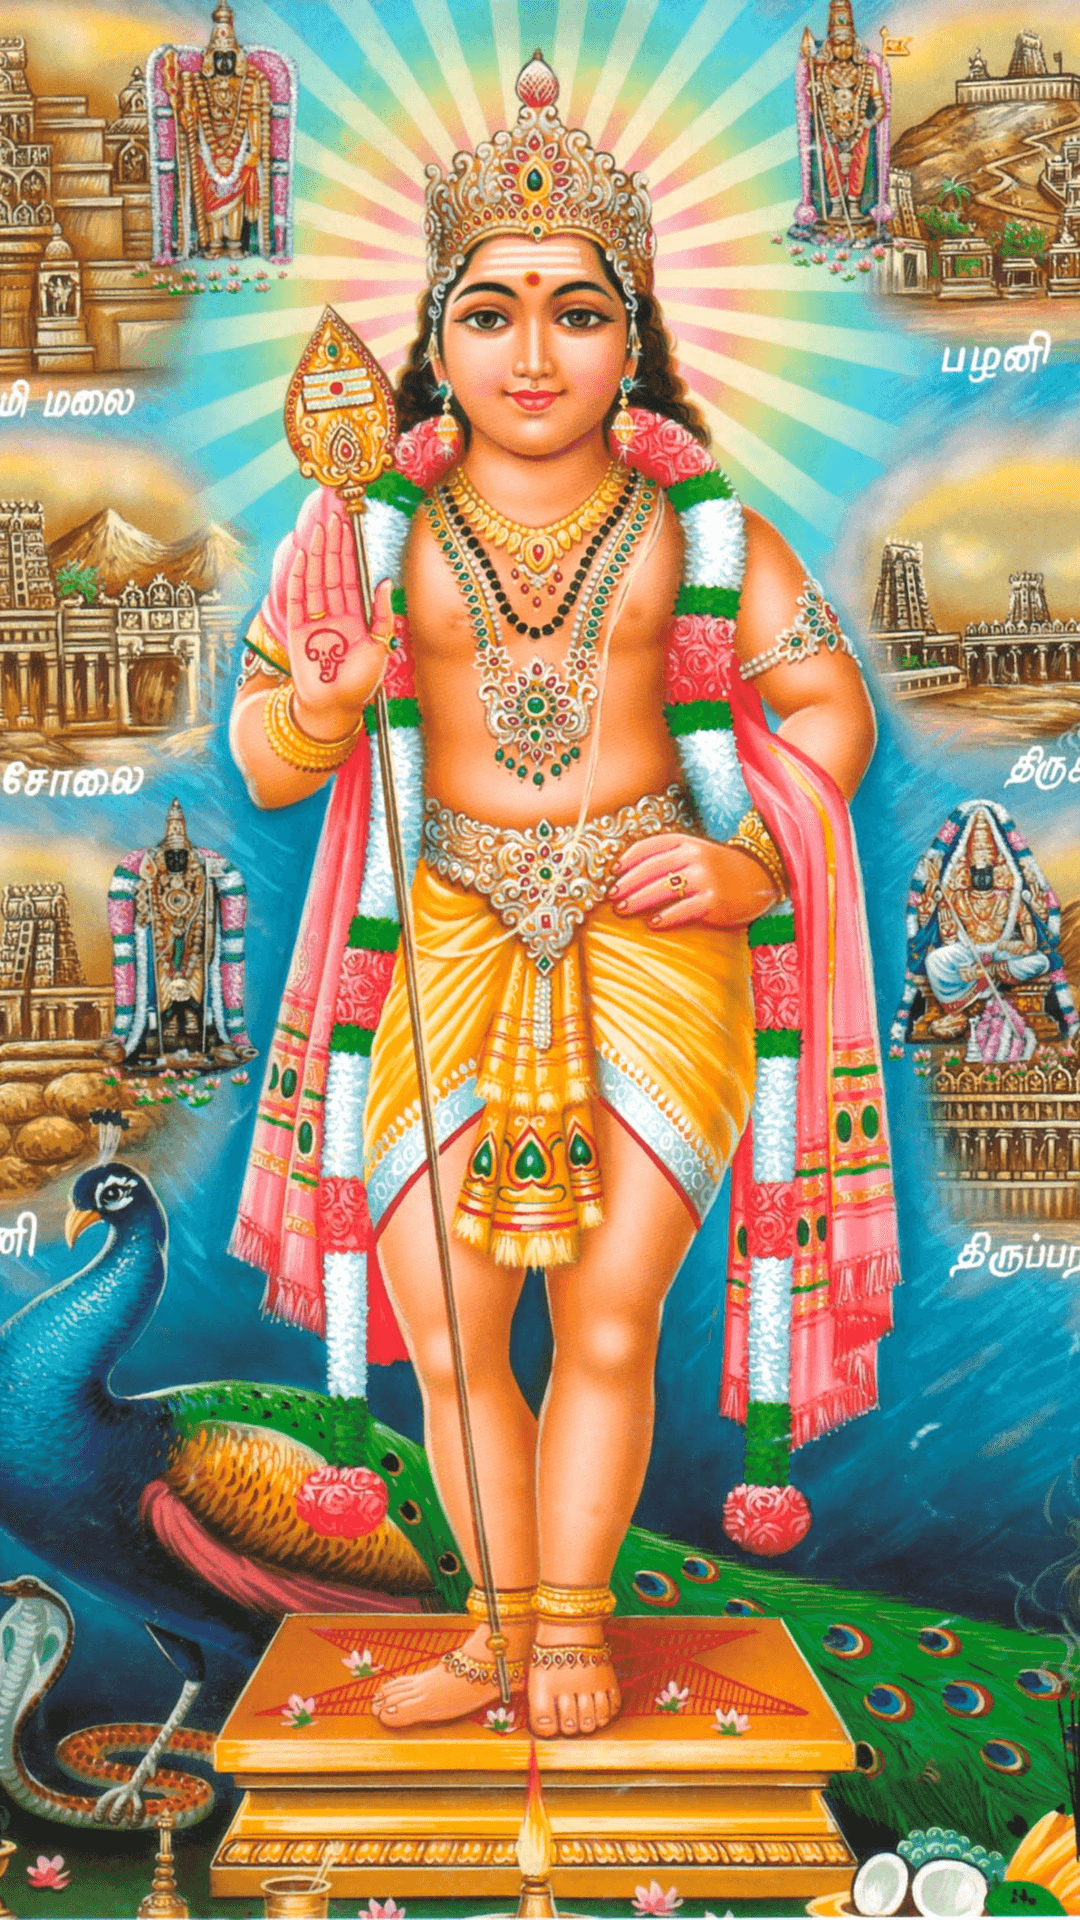 Lord Murugan, Hindu war god and metaphor for conquering self-centered desires